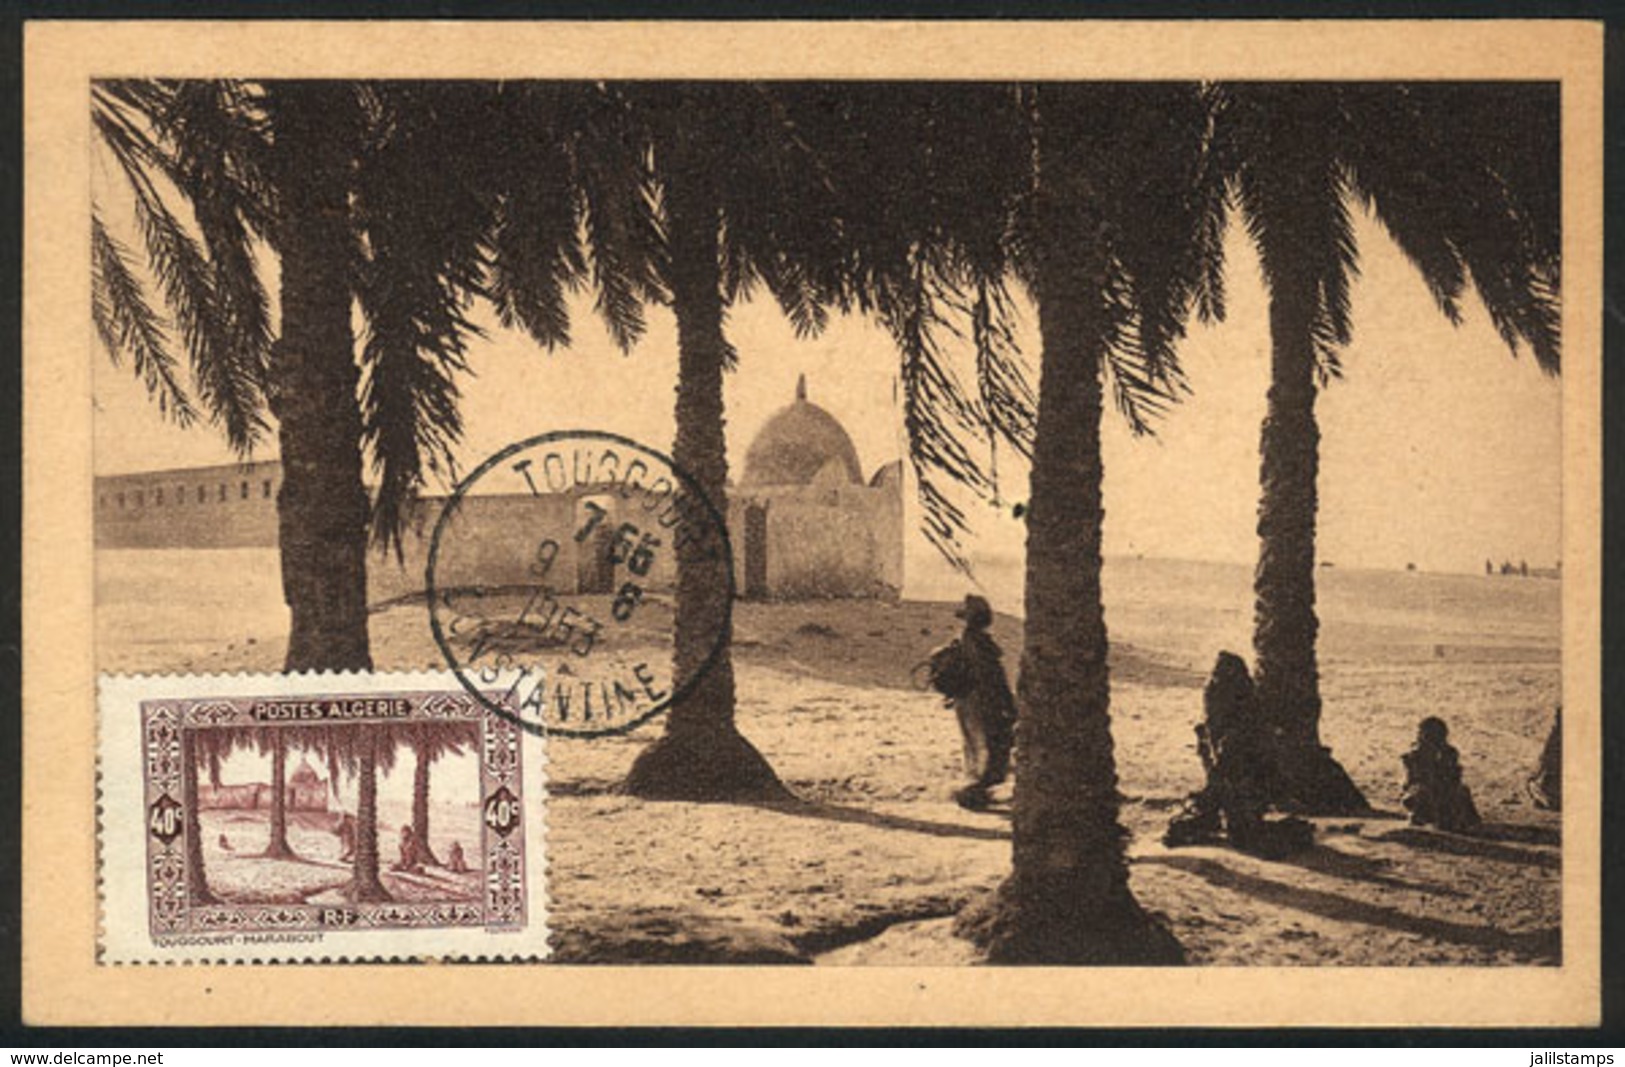 ALGERIA: TOUGGOURT: Tombs Of The Kings, Maximum Card Of 9/JUN/1953, VF Quality - Cartes-maximum